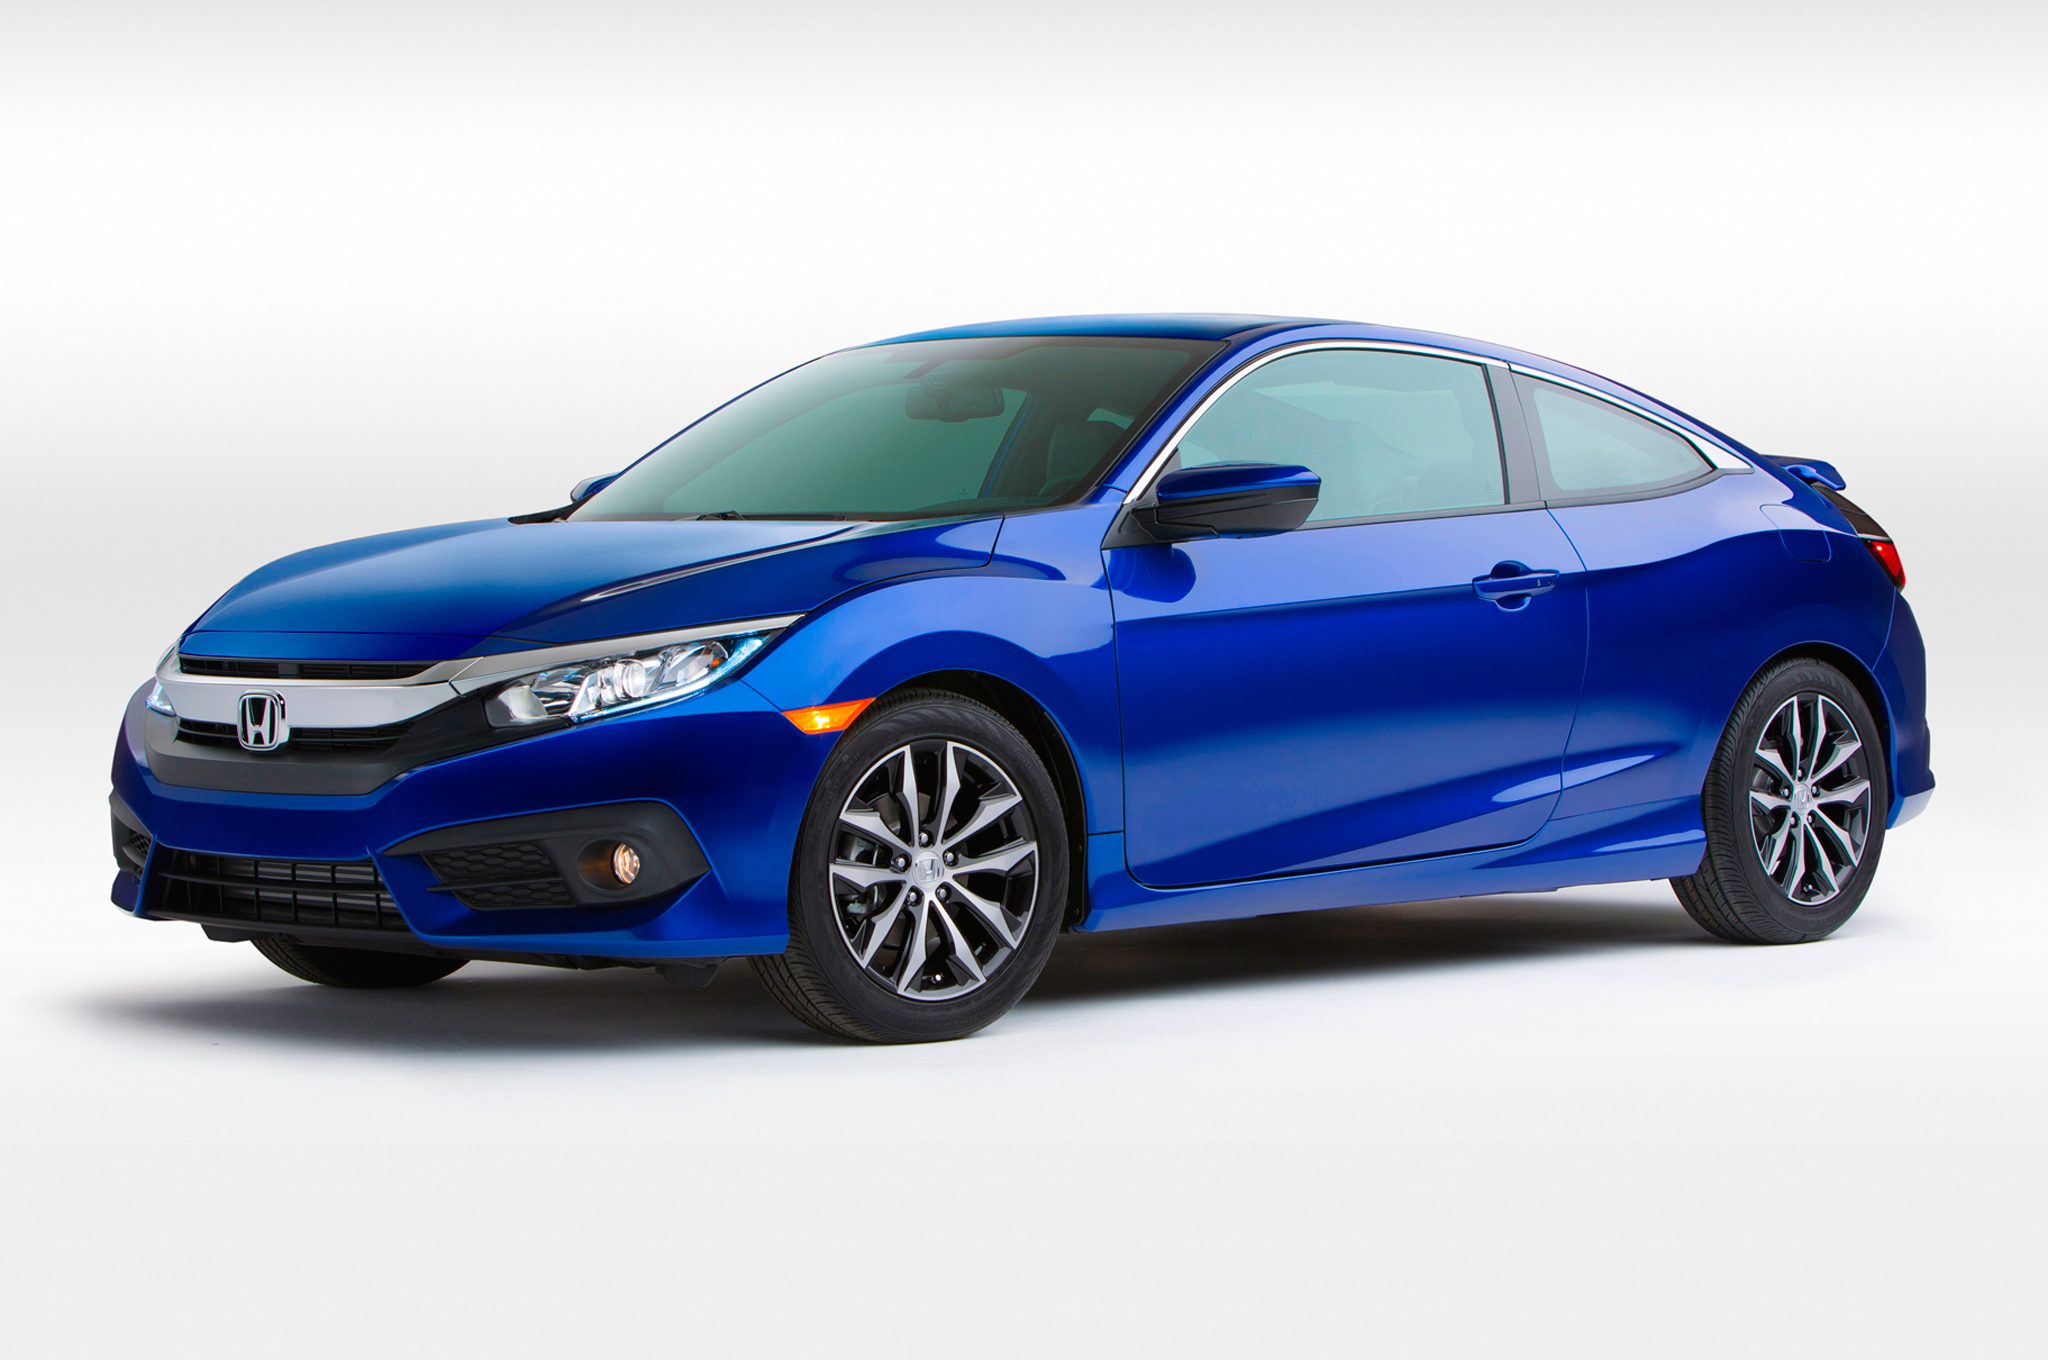 2016-Honda-Civic-Coupe-MT-homepage.jpg